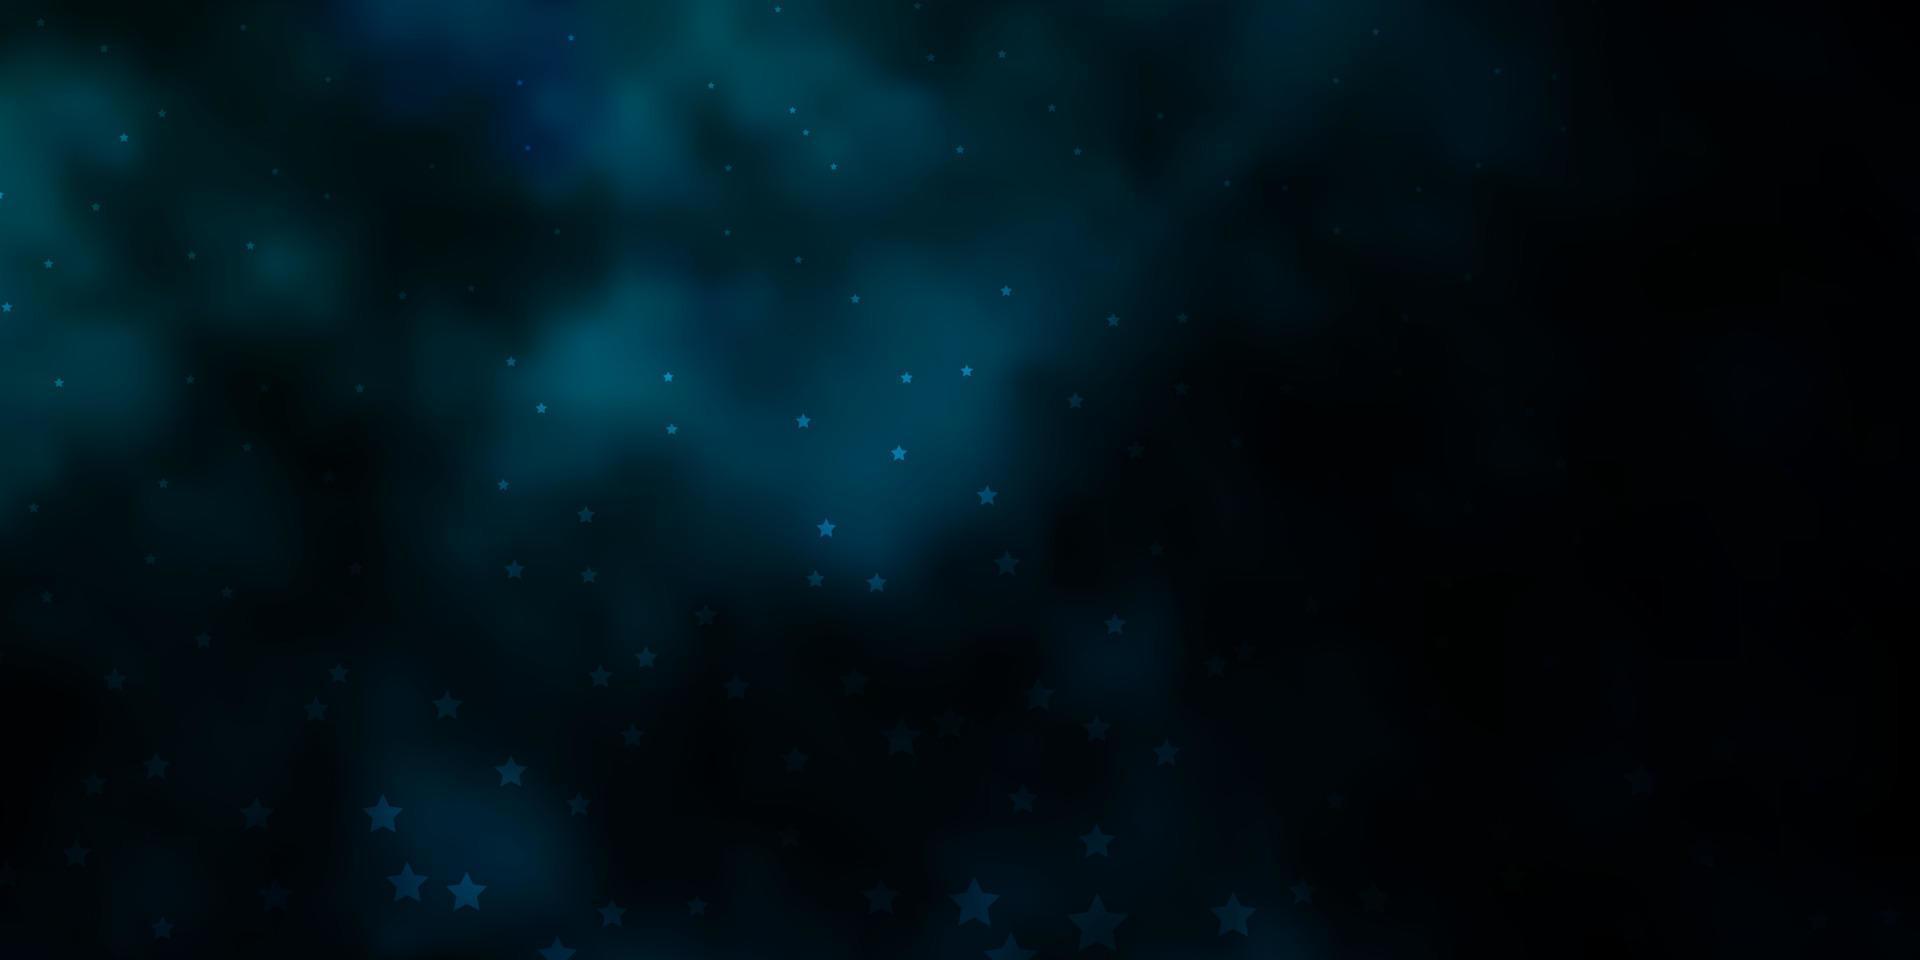 layout de vetor de azul escuro com estrelas brilhantes.